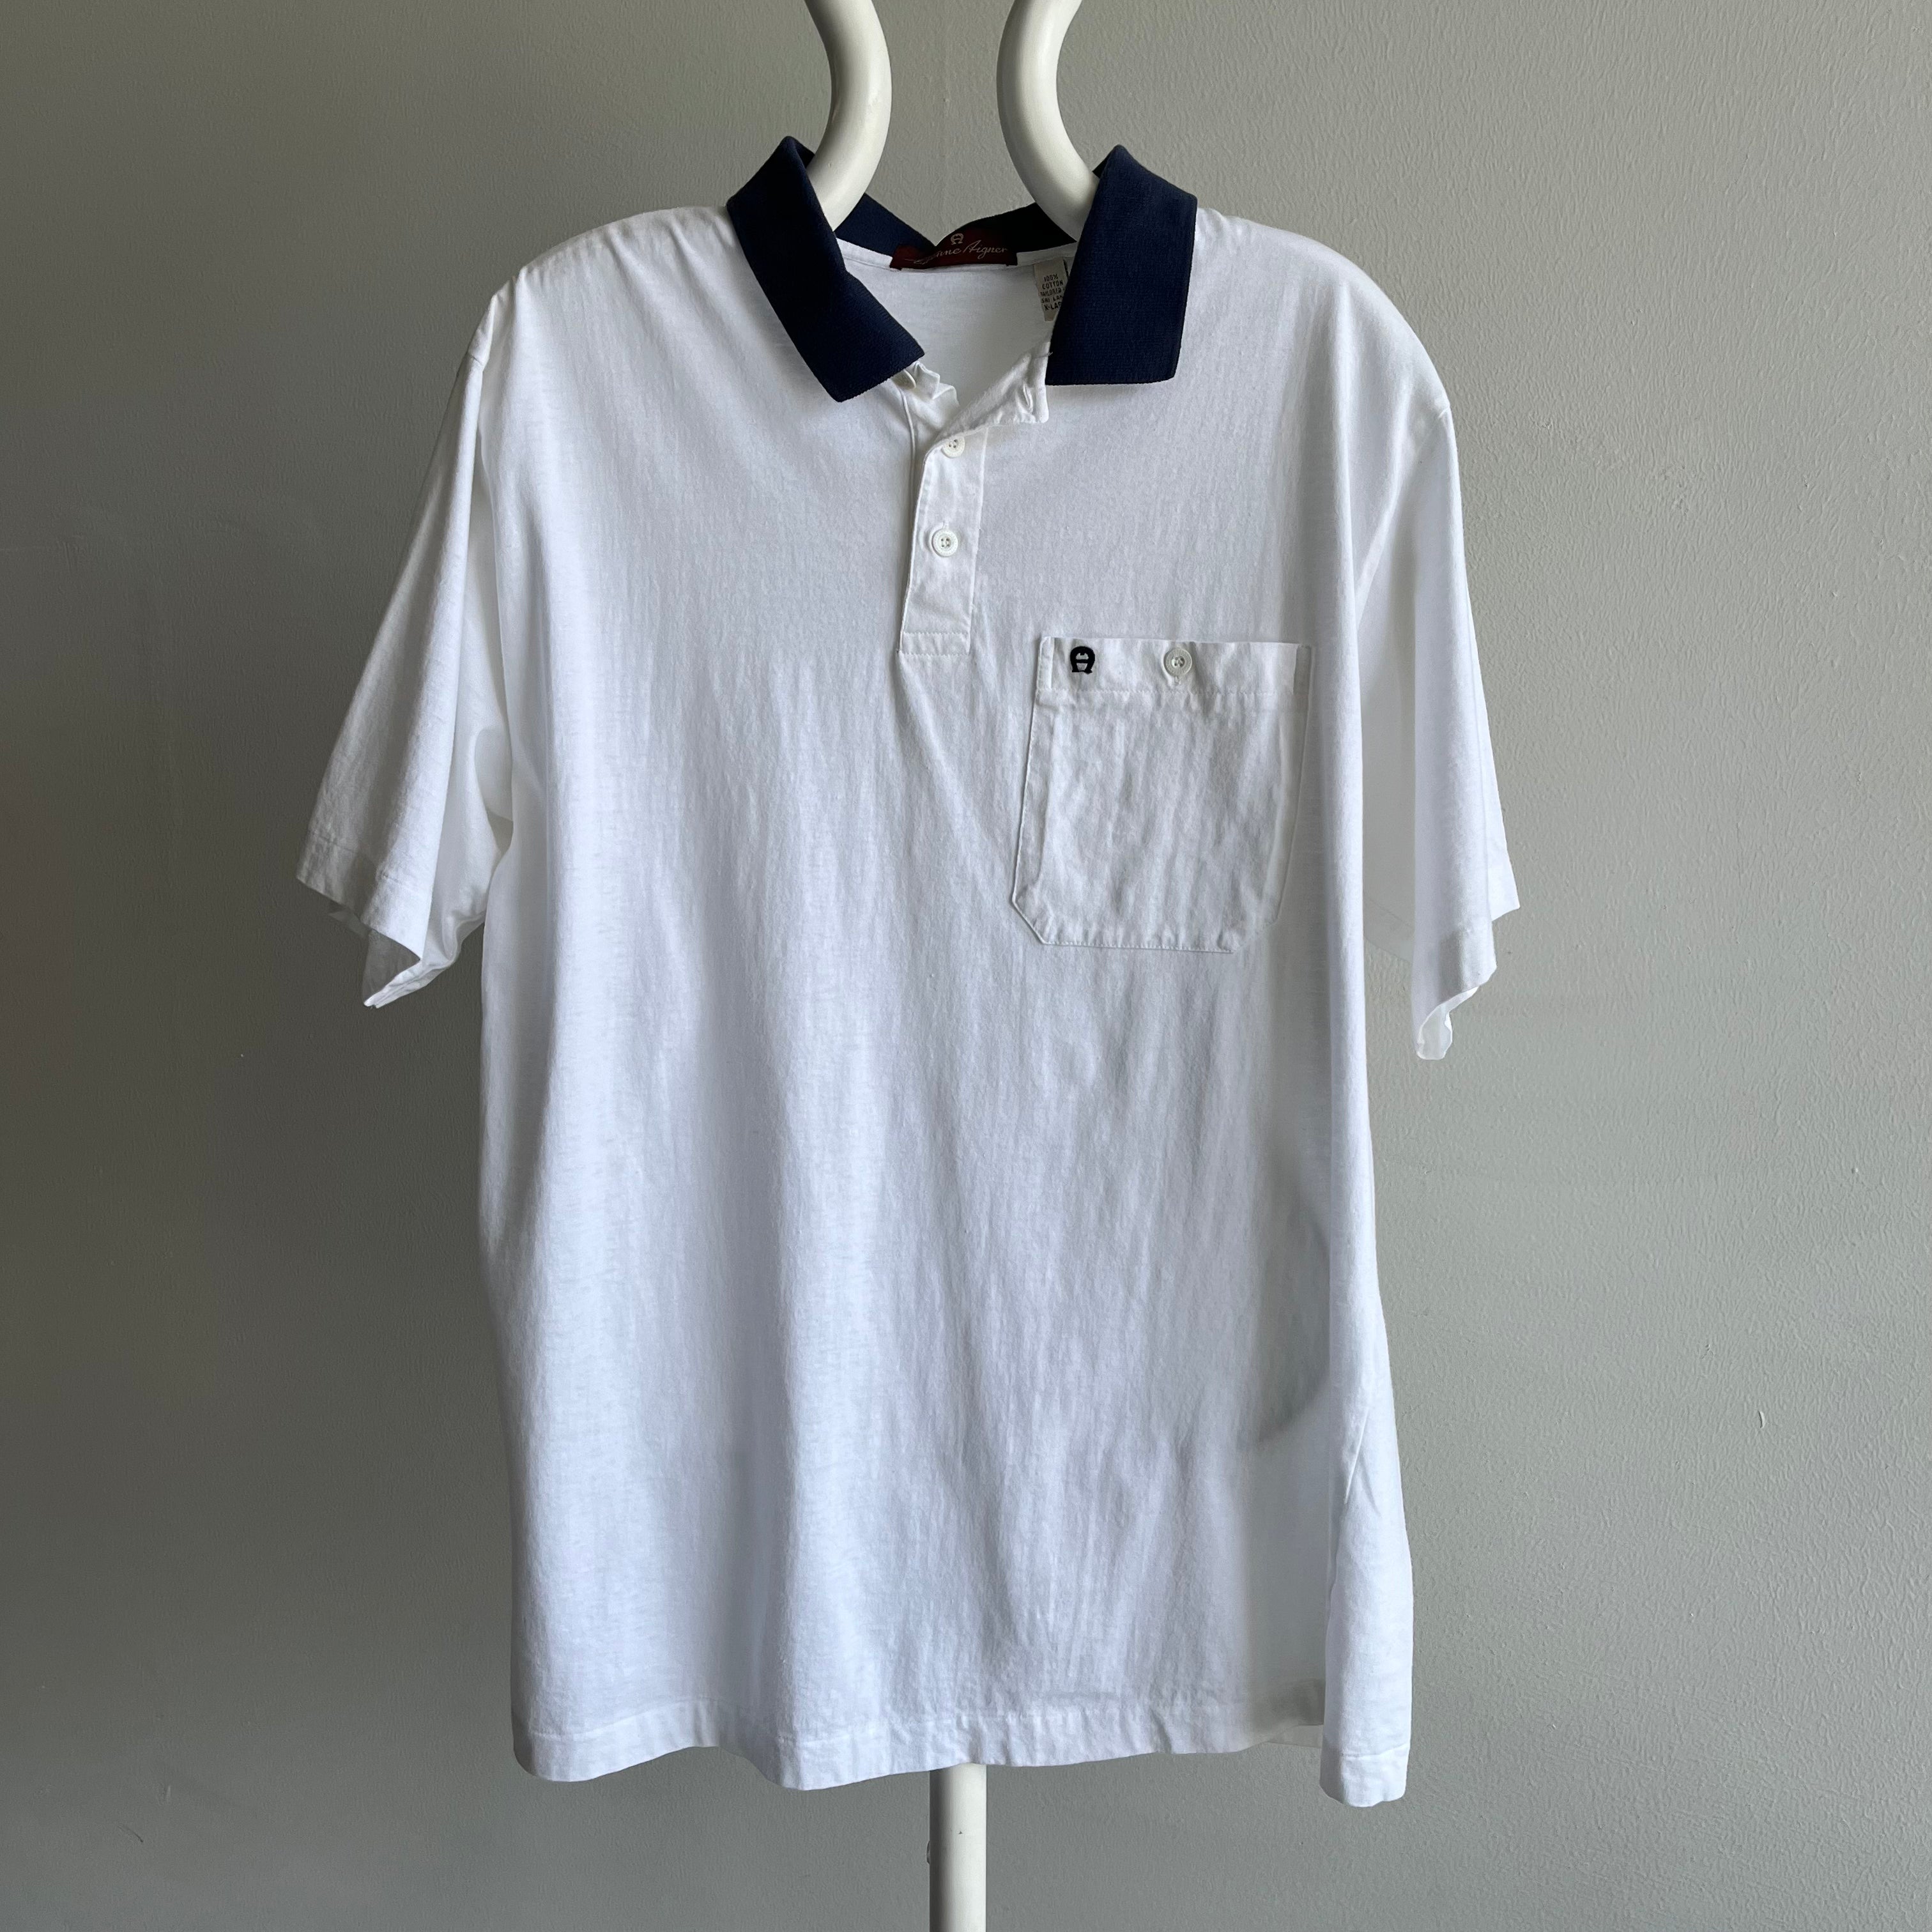 1990/2000s Two Tone Polo Shirt